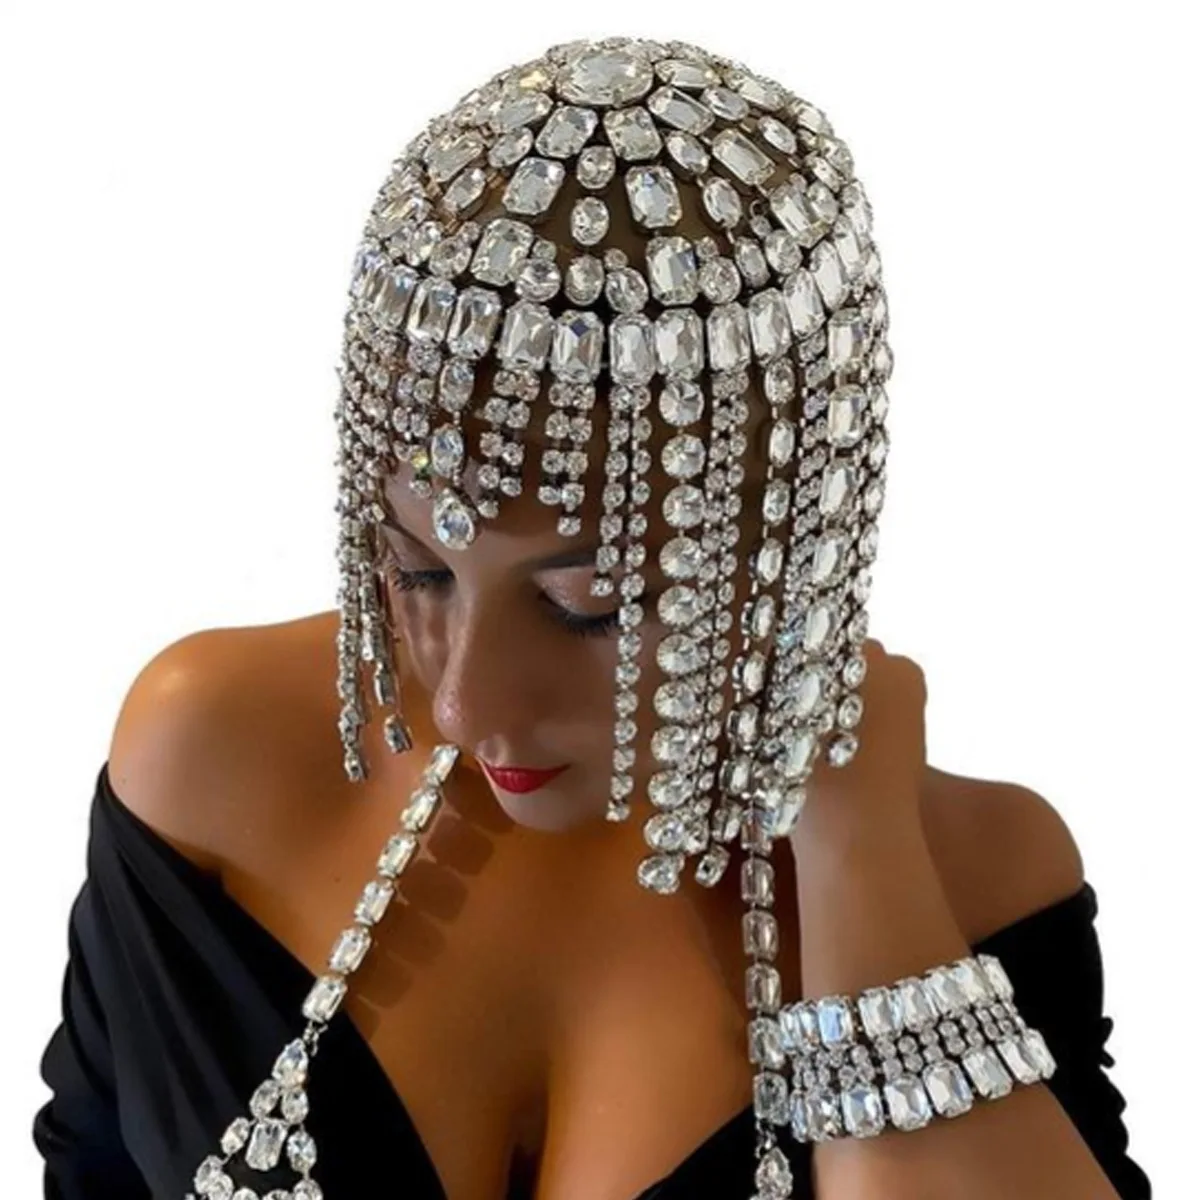 

Luxury Romantic Wedding Rhinestone Headpiece Forehead Hair Chain Shiny Crystal Chrismas Headdress Jewelry Gifts Bridal Accessory